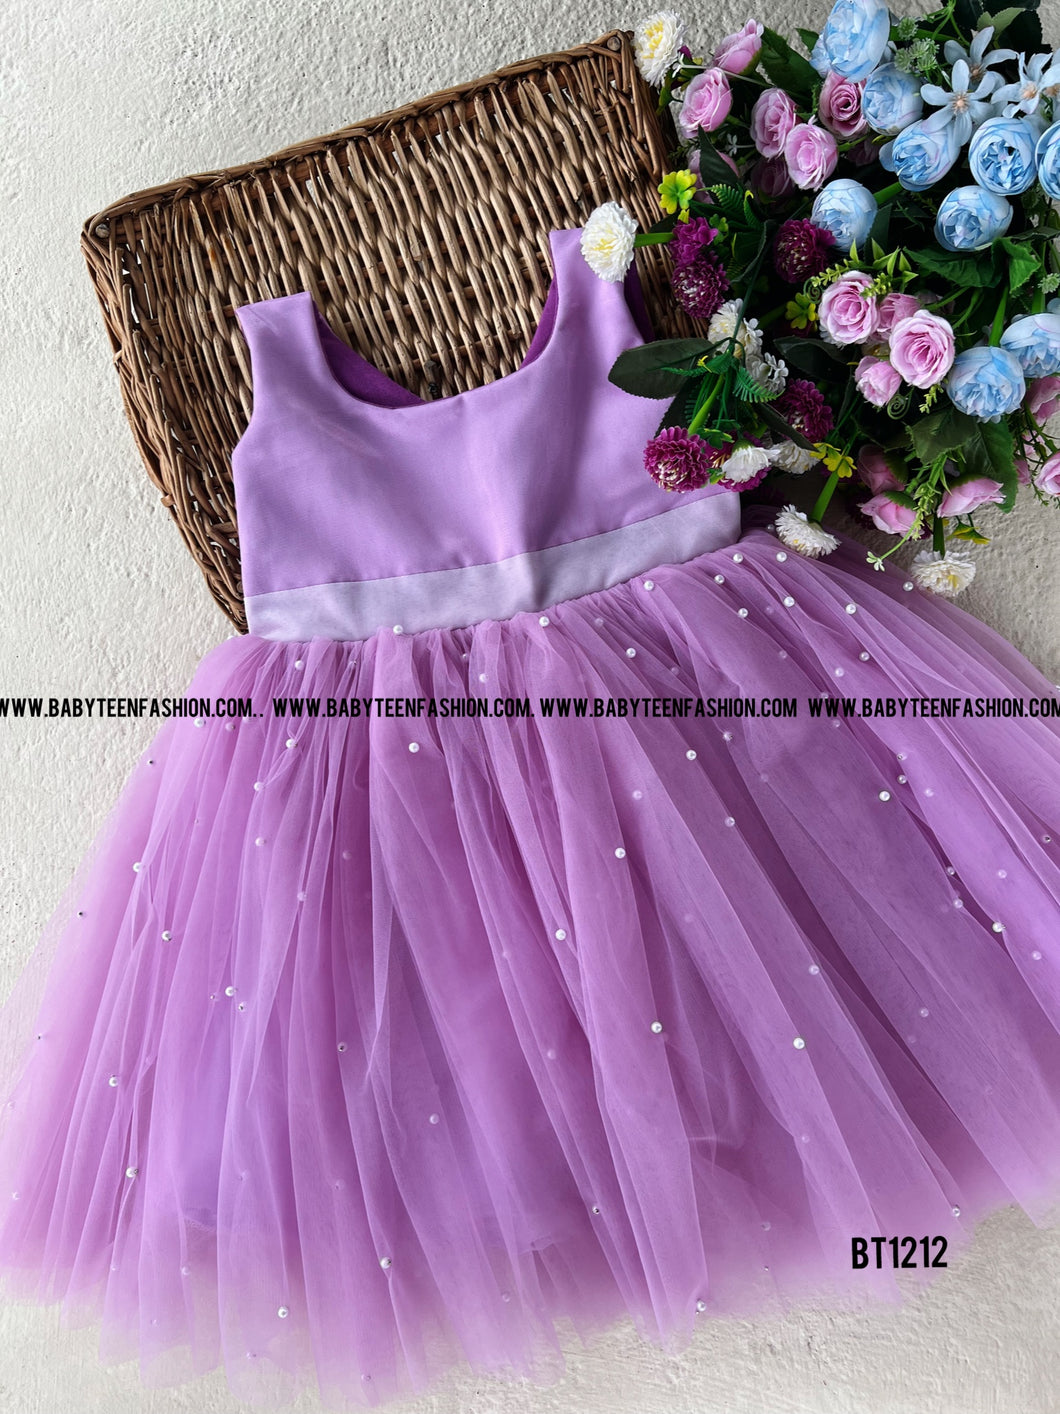 BT1212 Lilac Princess Twinkle Dress – A Fairytale in Fabric